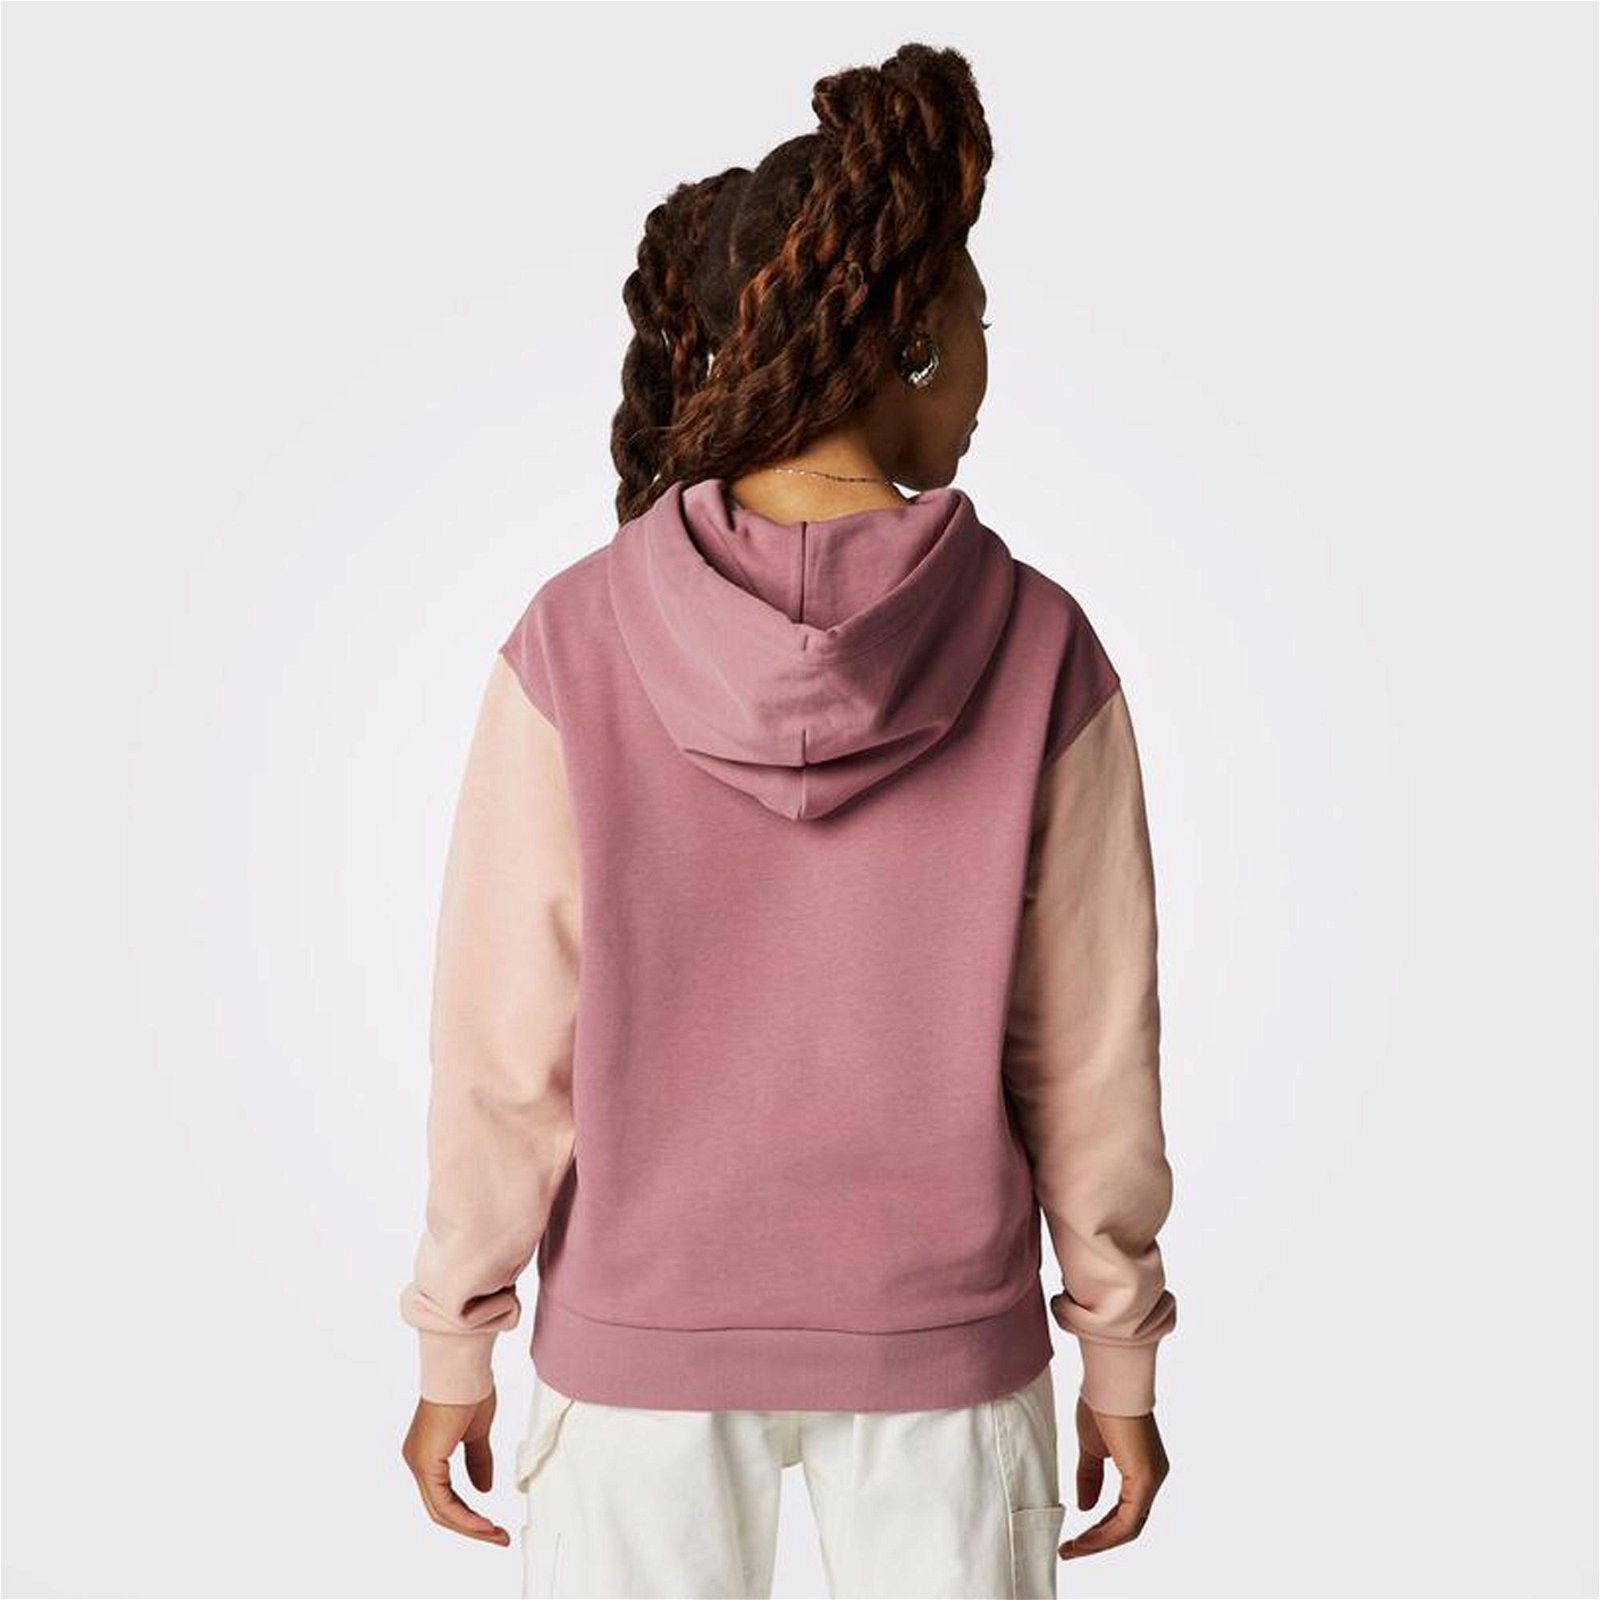 Converse Star Chevron Colorblocked Kadın Pembe Sweatshirt